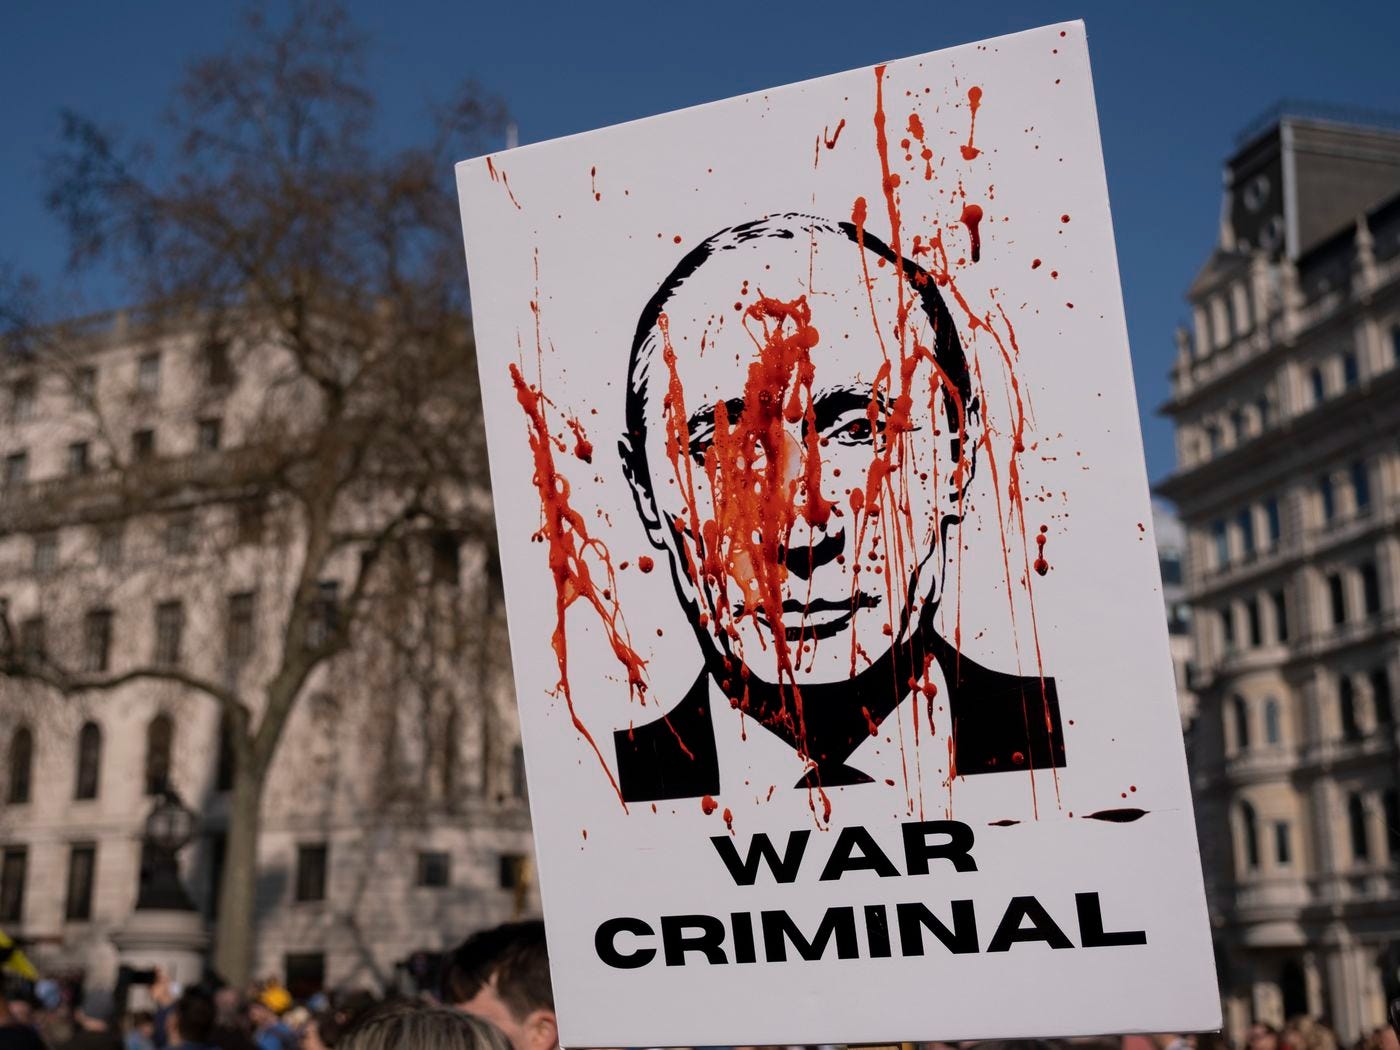 Could Vladimir Putin face punishment as a war criminal? - Vox